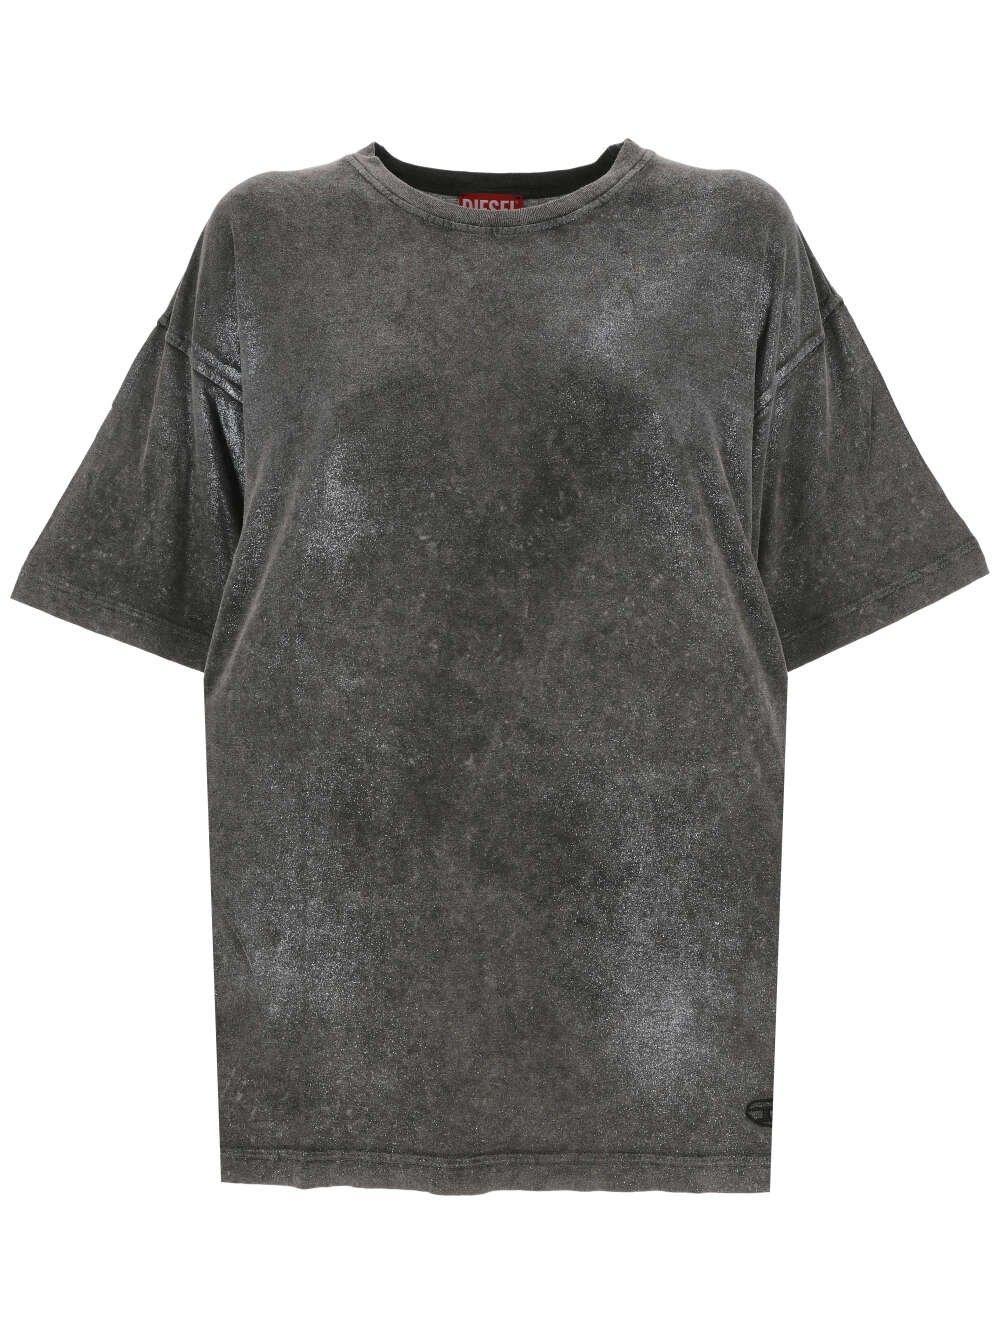 Diesel T-buxt Faded Metallic T-shirt In Black/grey